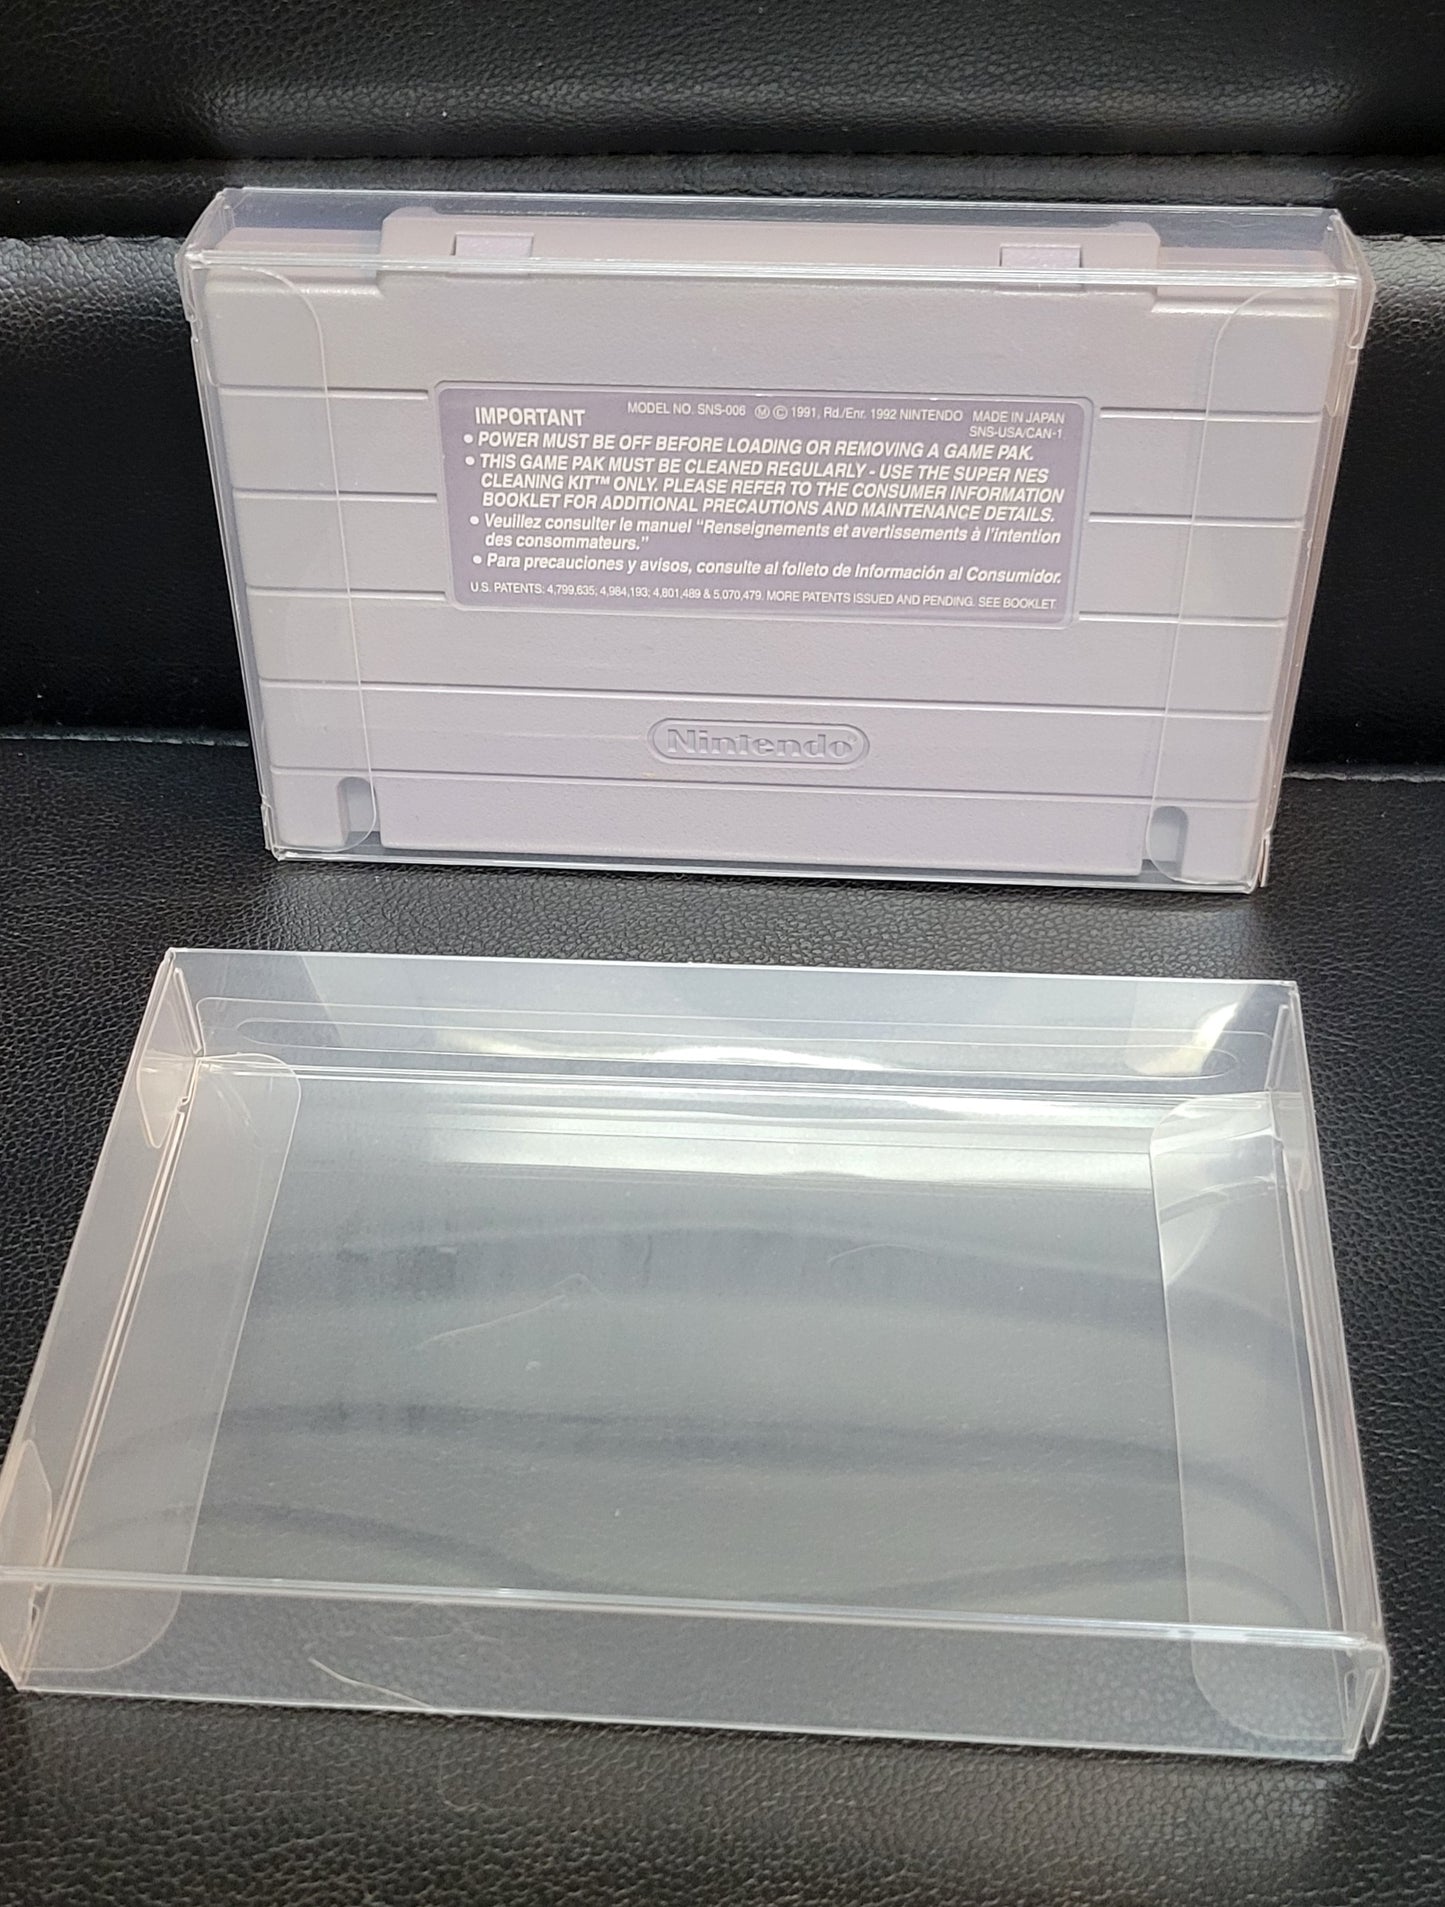 Authentic Mortal Kombat - SNES - (Super Nintendo Ent. System 1990) NTSC Cartridge Plus Protector